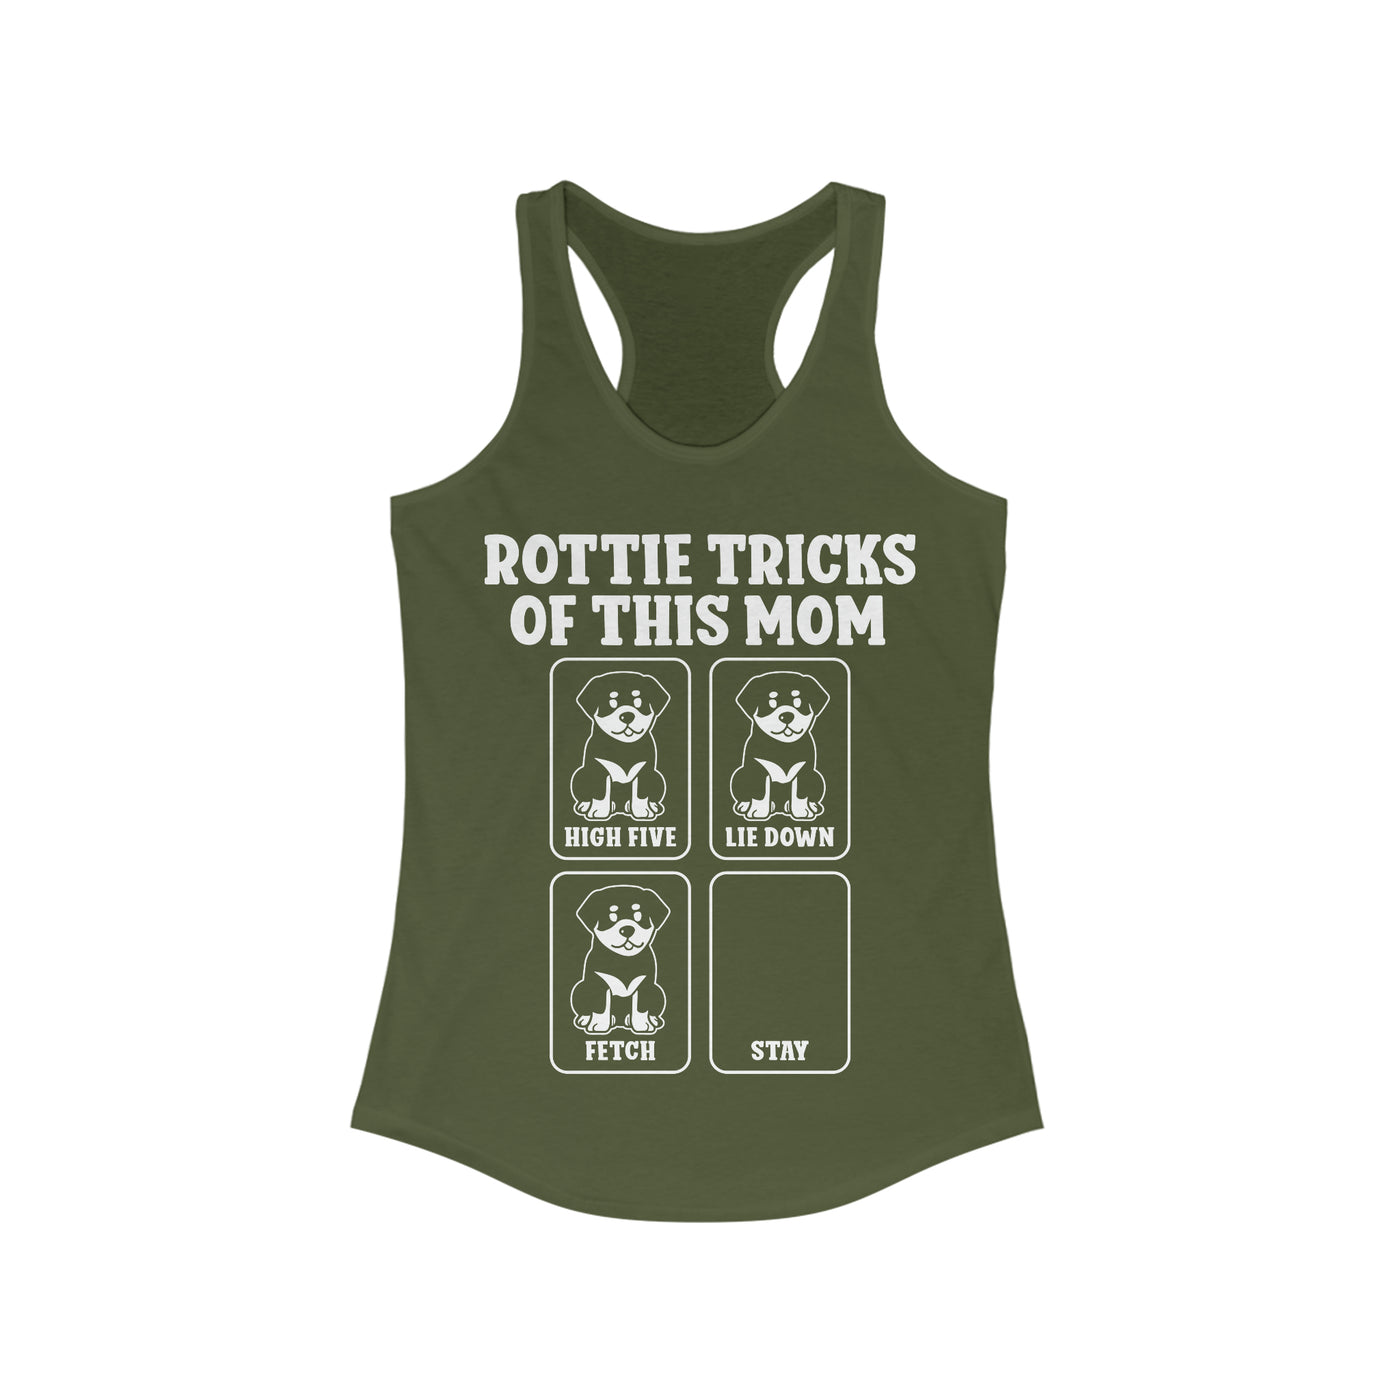 Rottie Tricks Tank Top